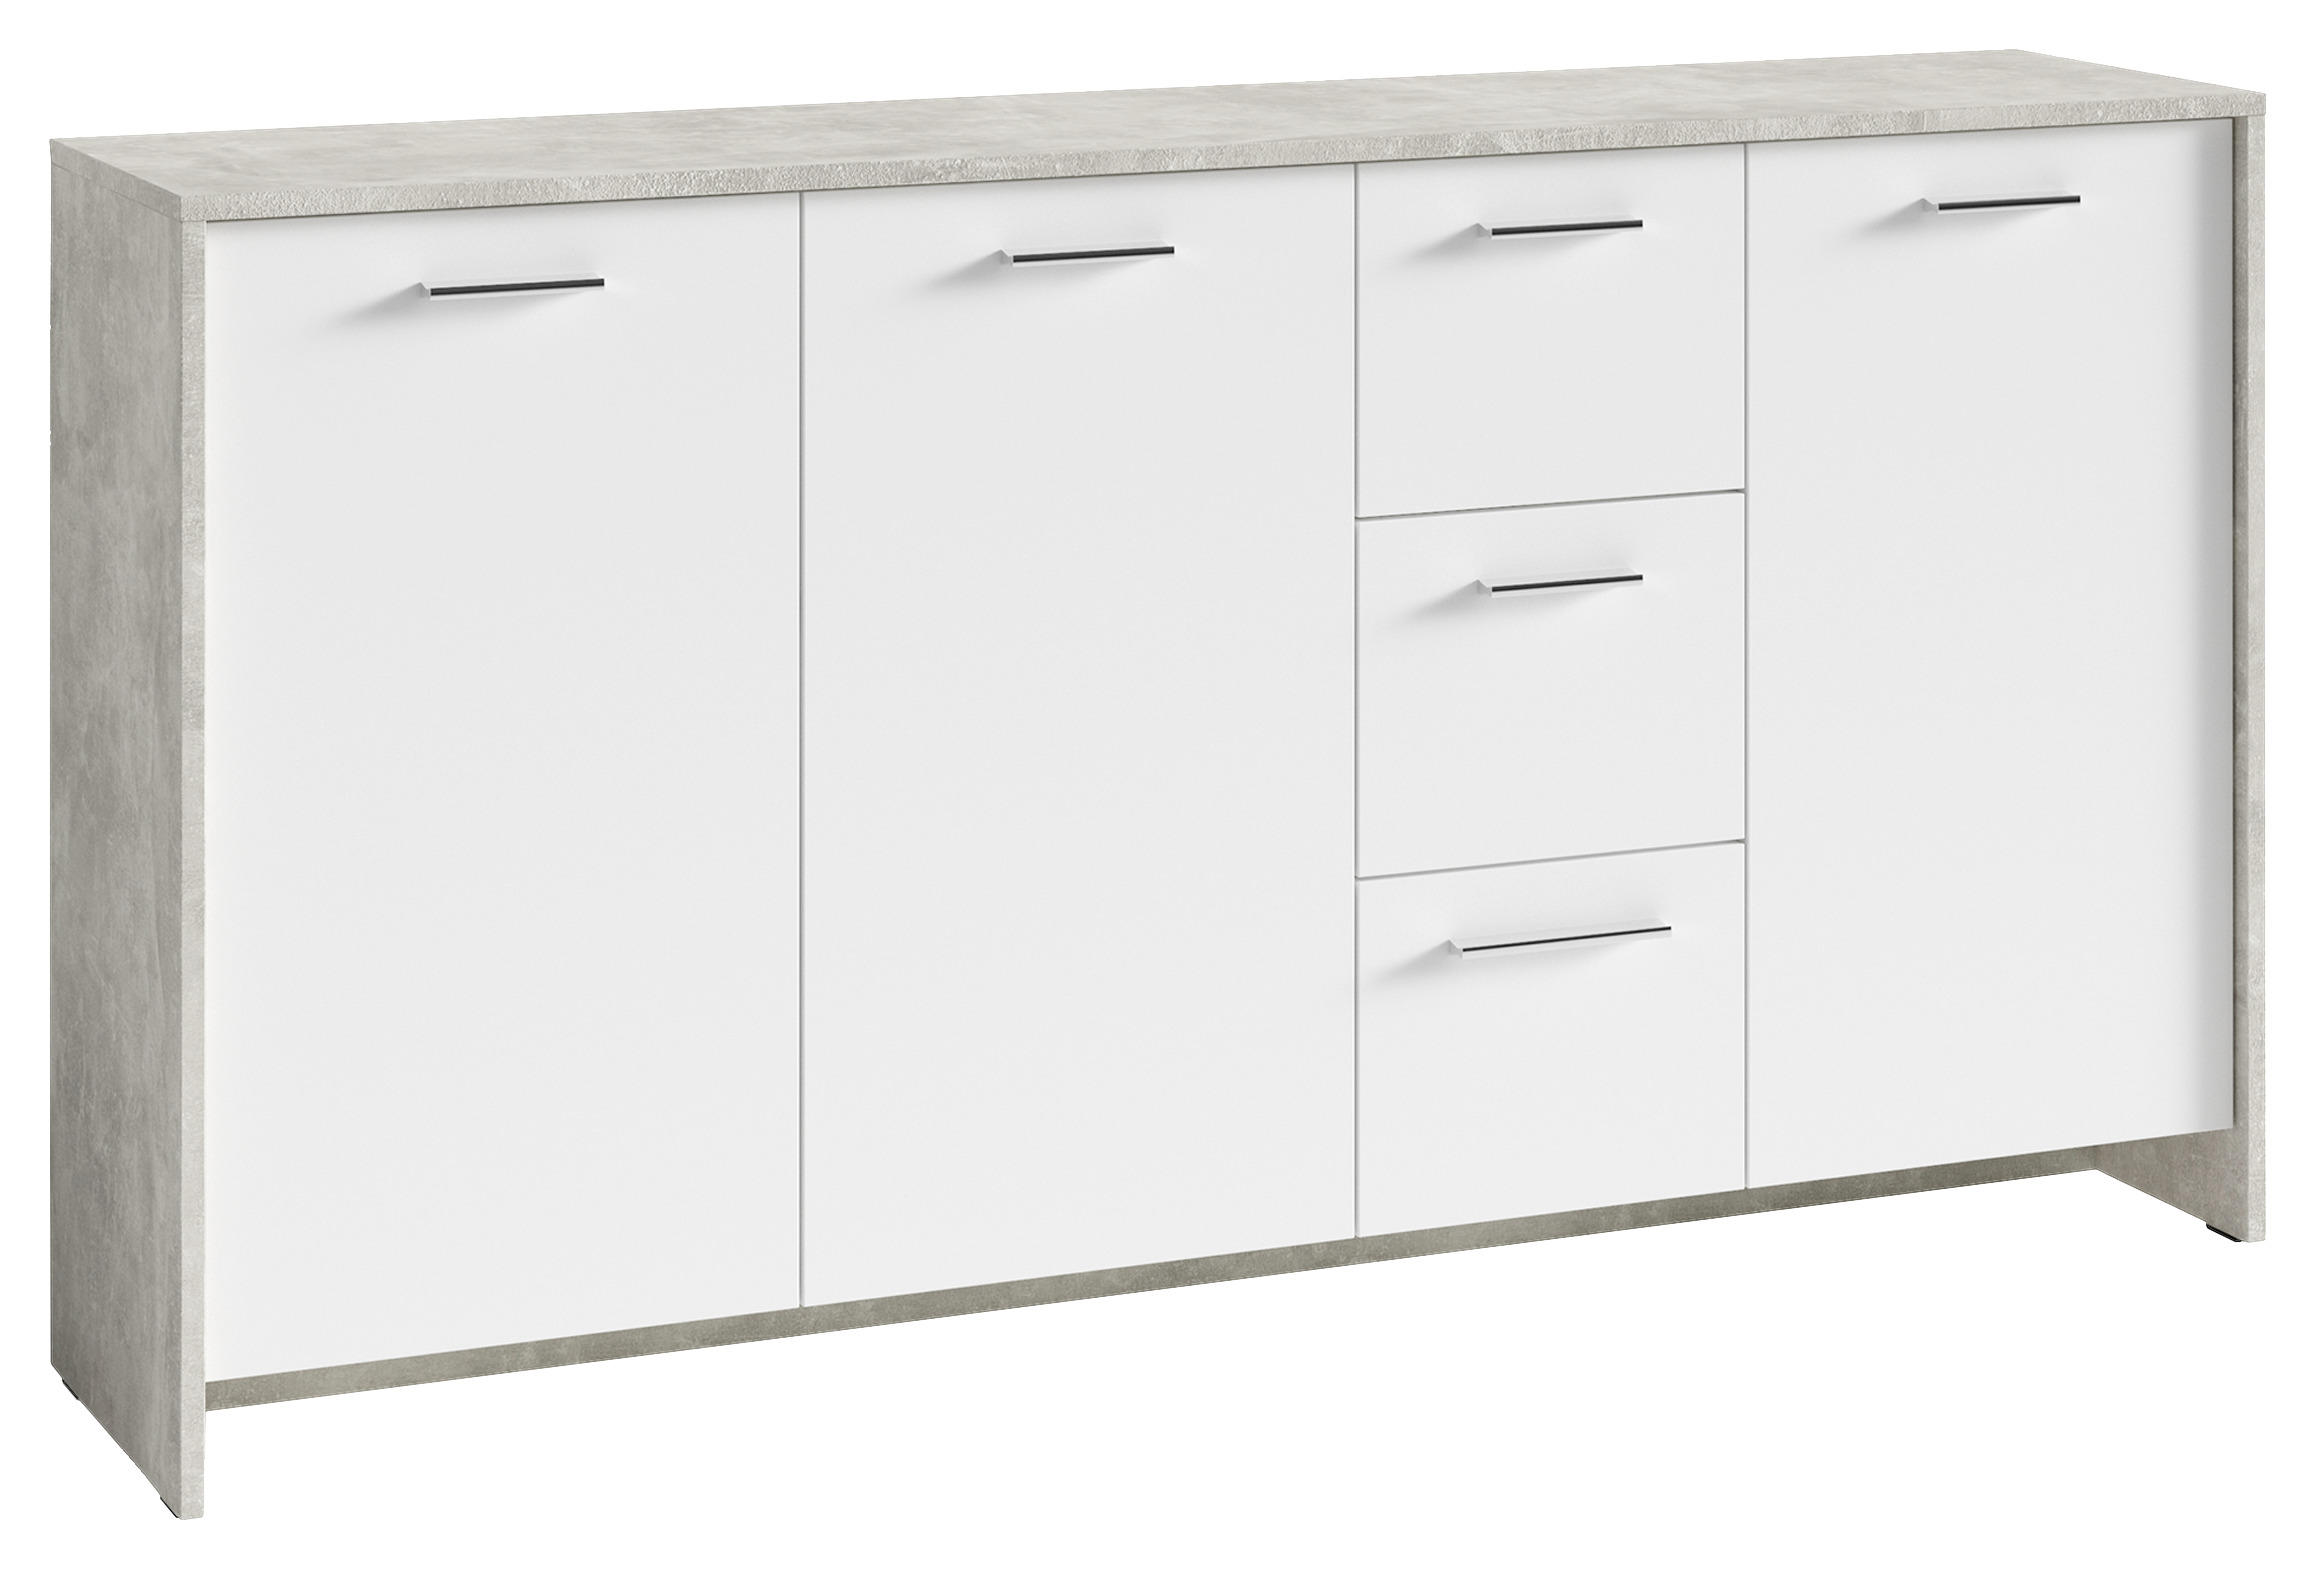 SIDEBOARD Grau, Weiß  - Silberfarben/Weiß, KONVENTIONELL, Holzwerkstoff/Kunststoff (153/83/35cm) - MID.YOU